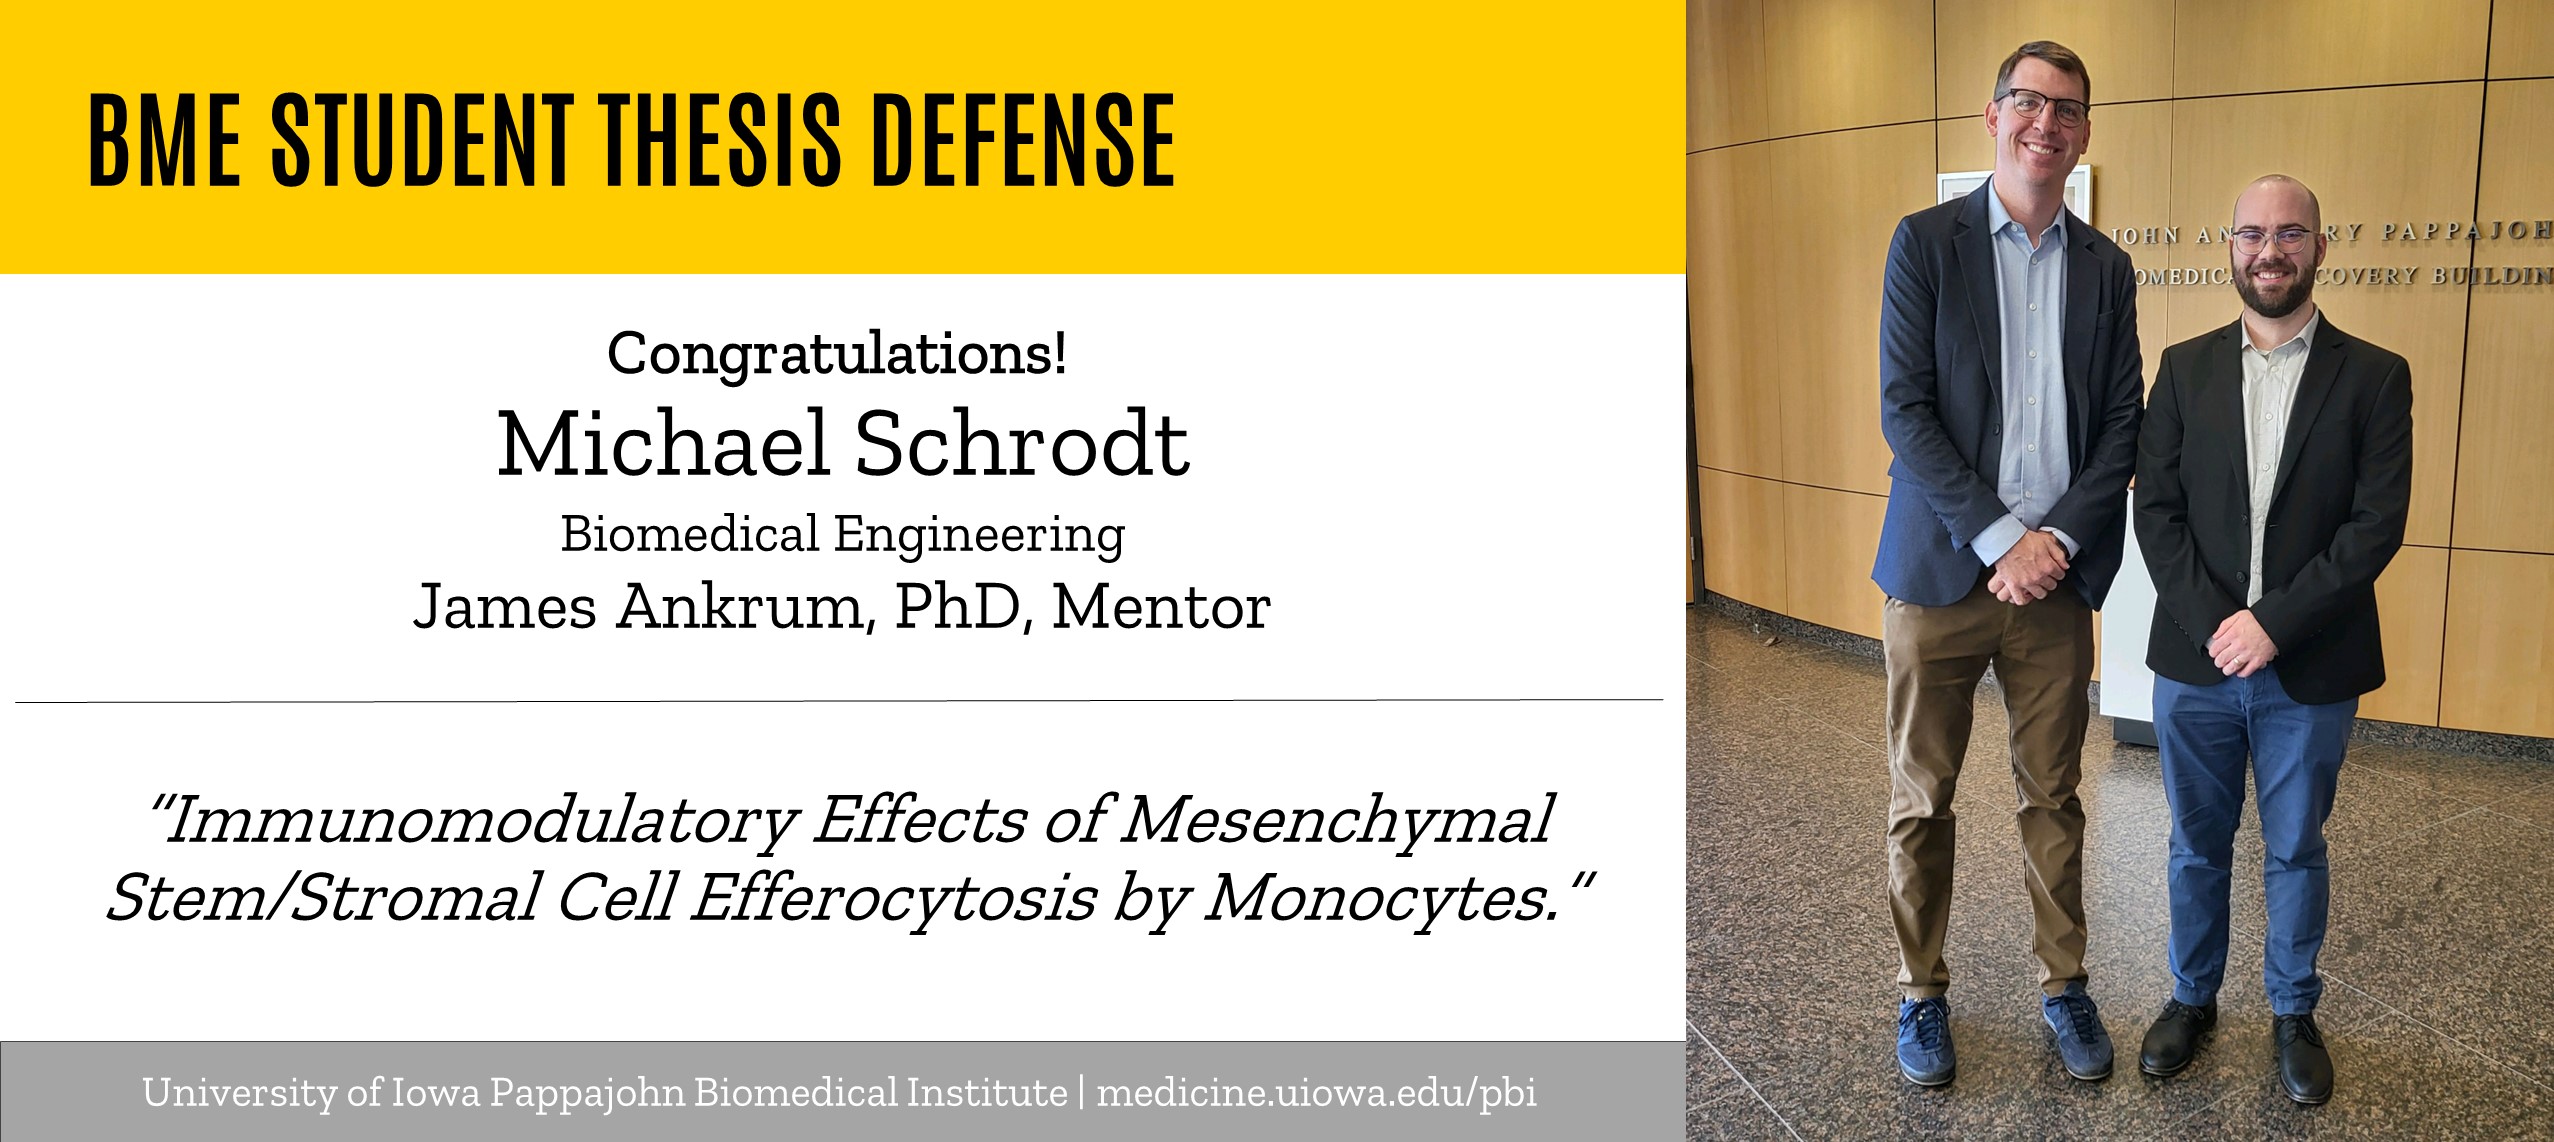 Celebration of Michael Schrodt's thesis defense